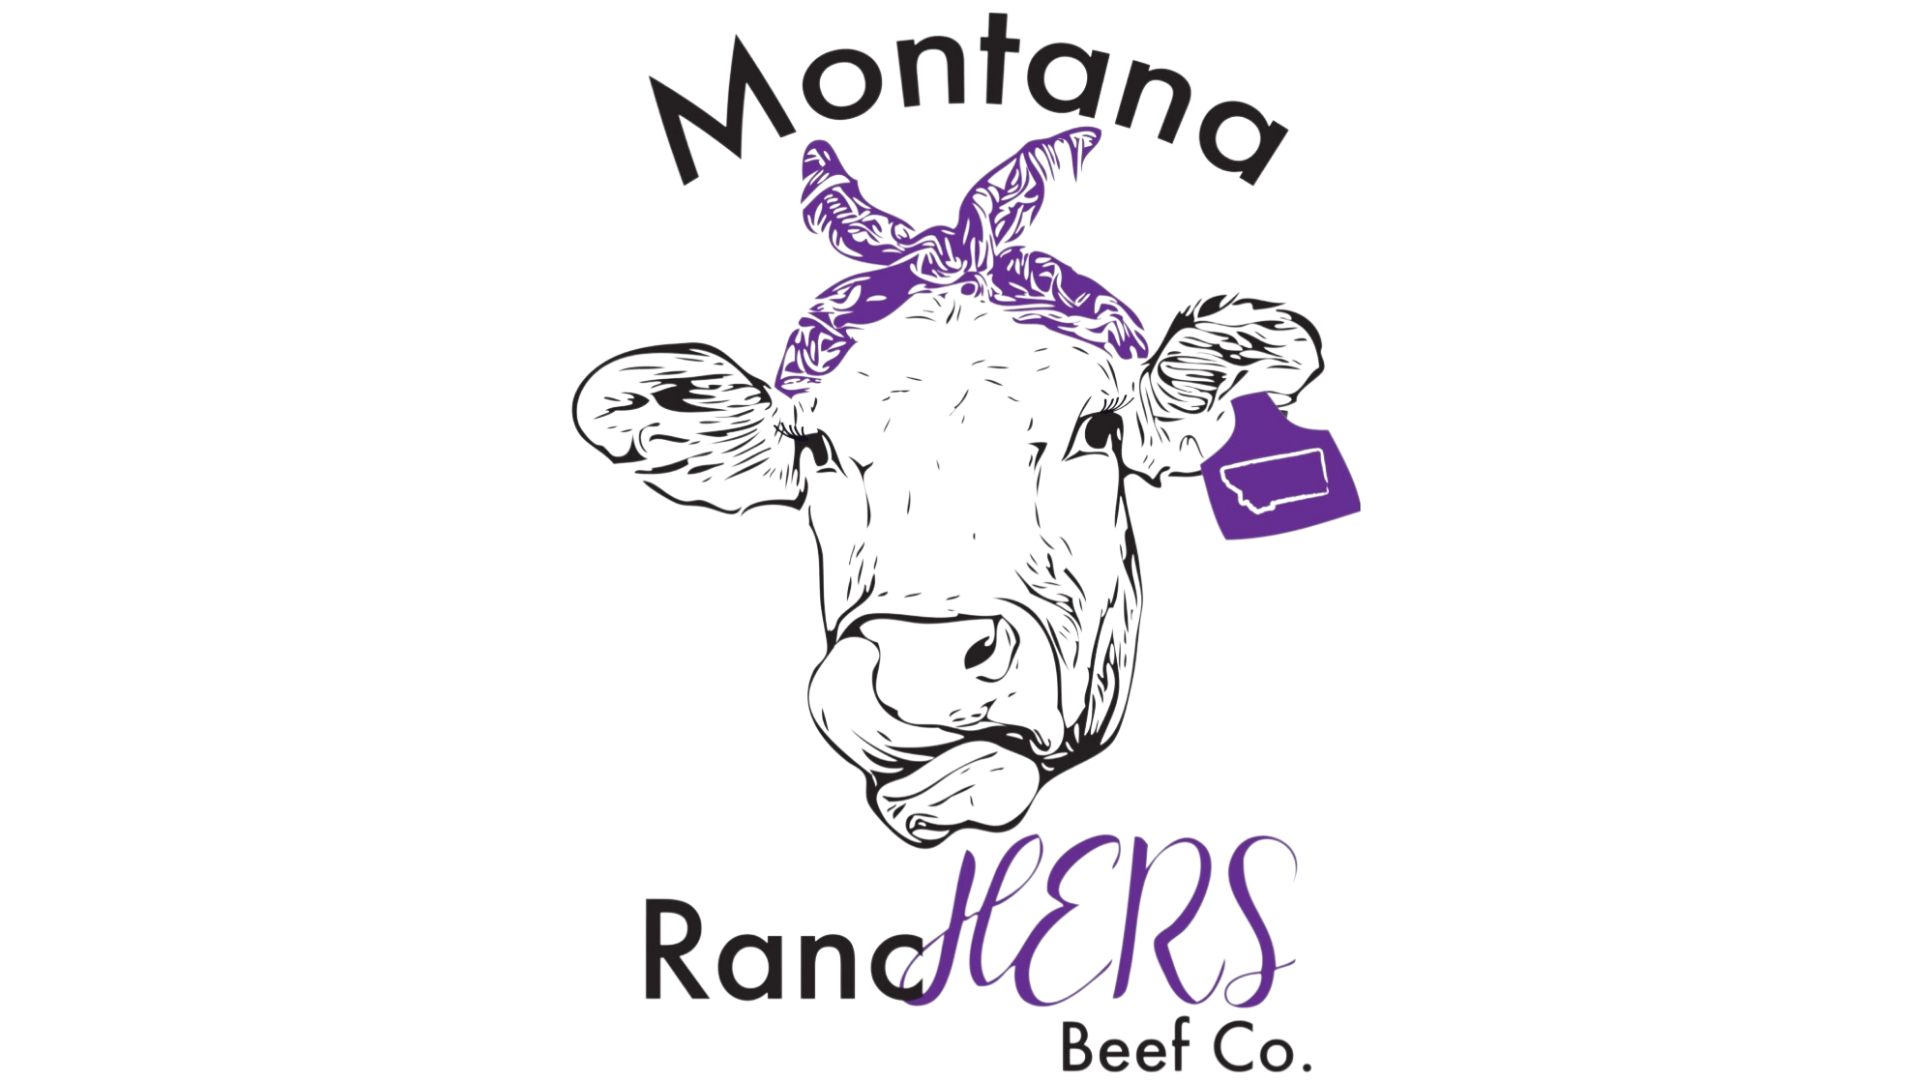  Montana RancHERS Beef Co